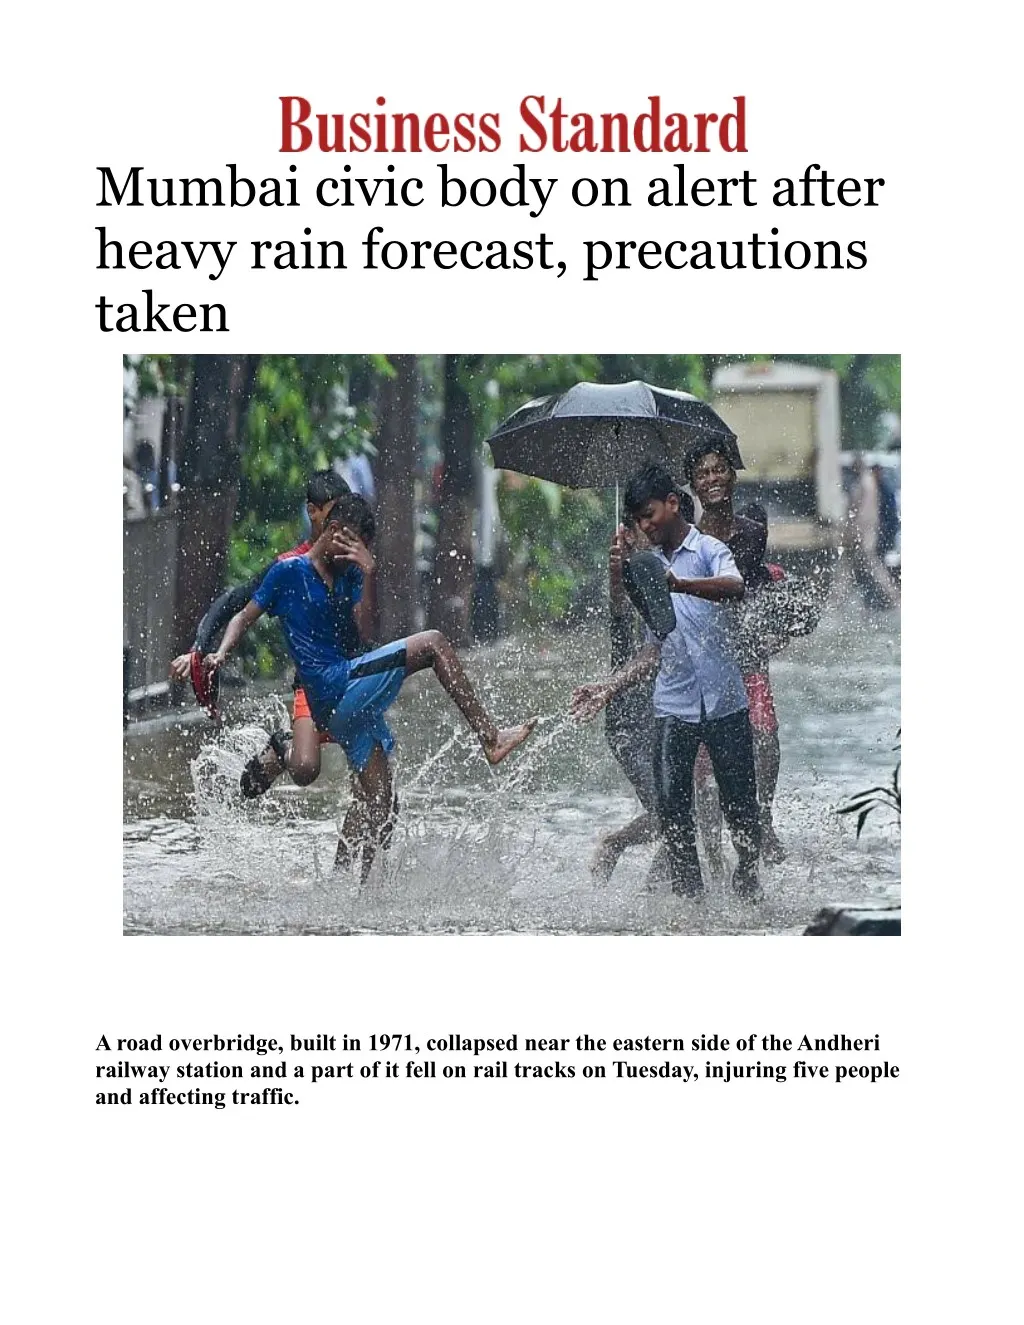 mumbai civic body on alert after heavy rain